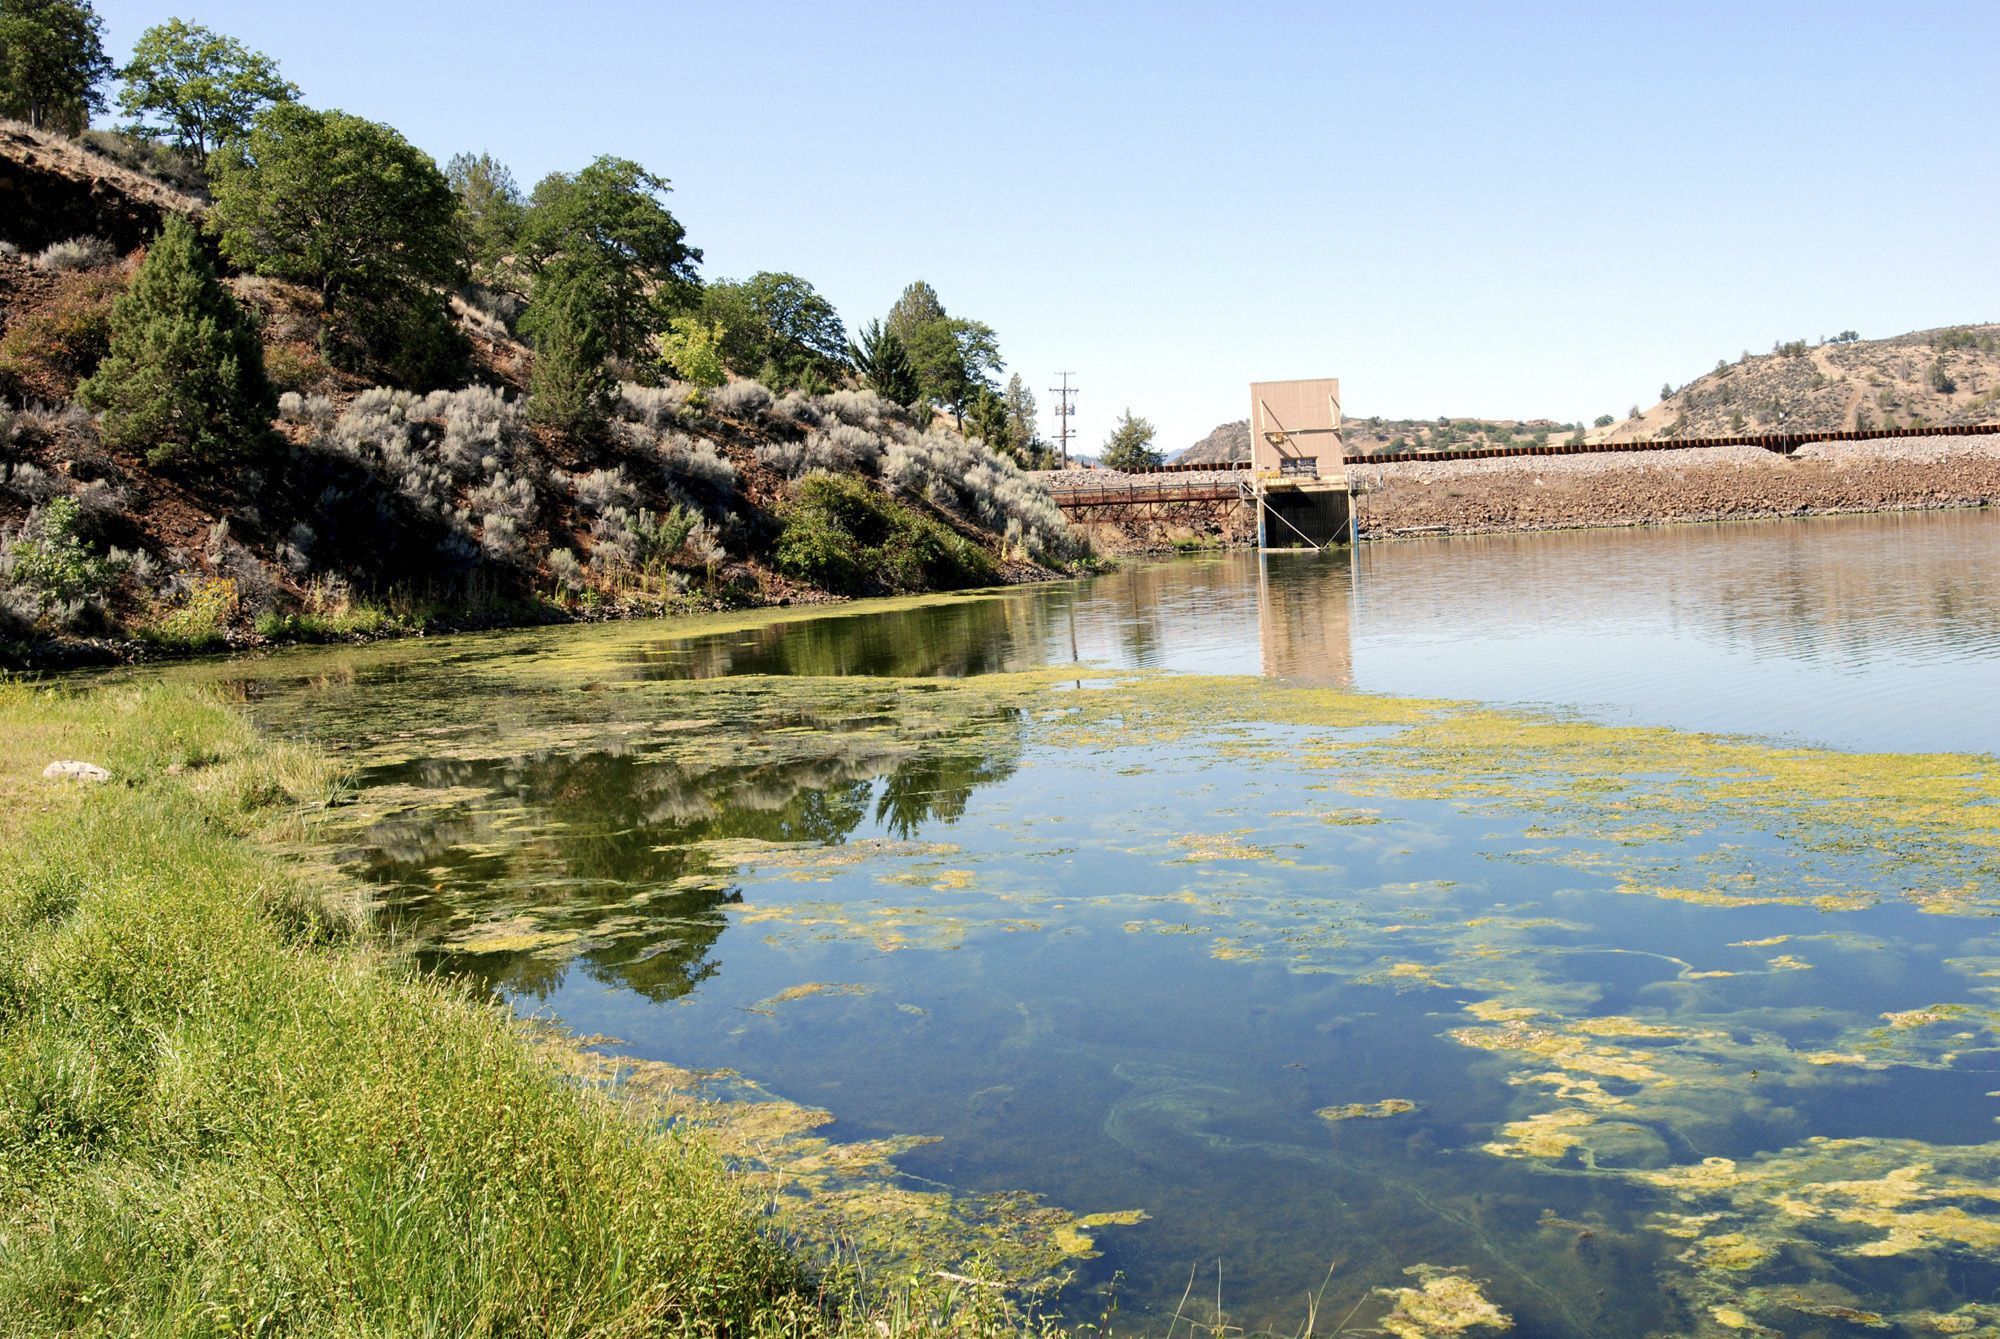 This Aug. 21, 2009, photo shows an algae bloom in the reservoir behind Iron Gate Dam on the Klamath River near Hornbrook, California.